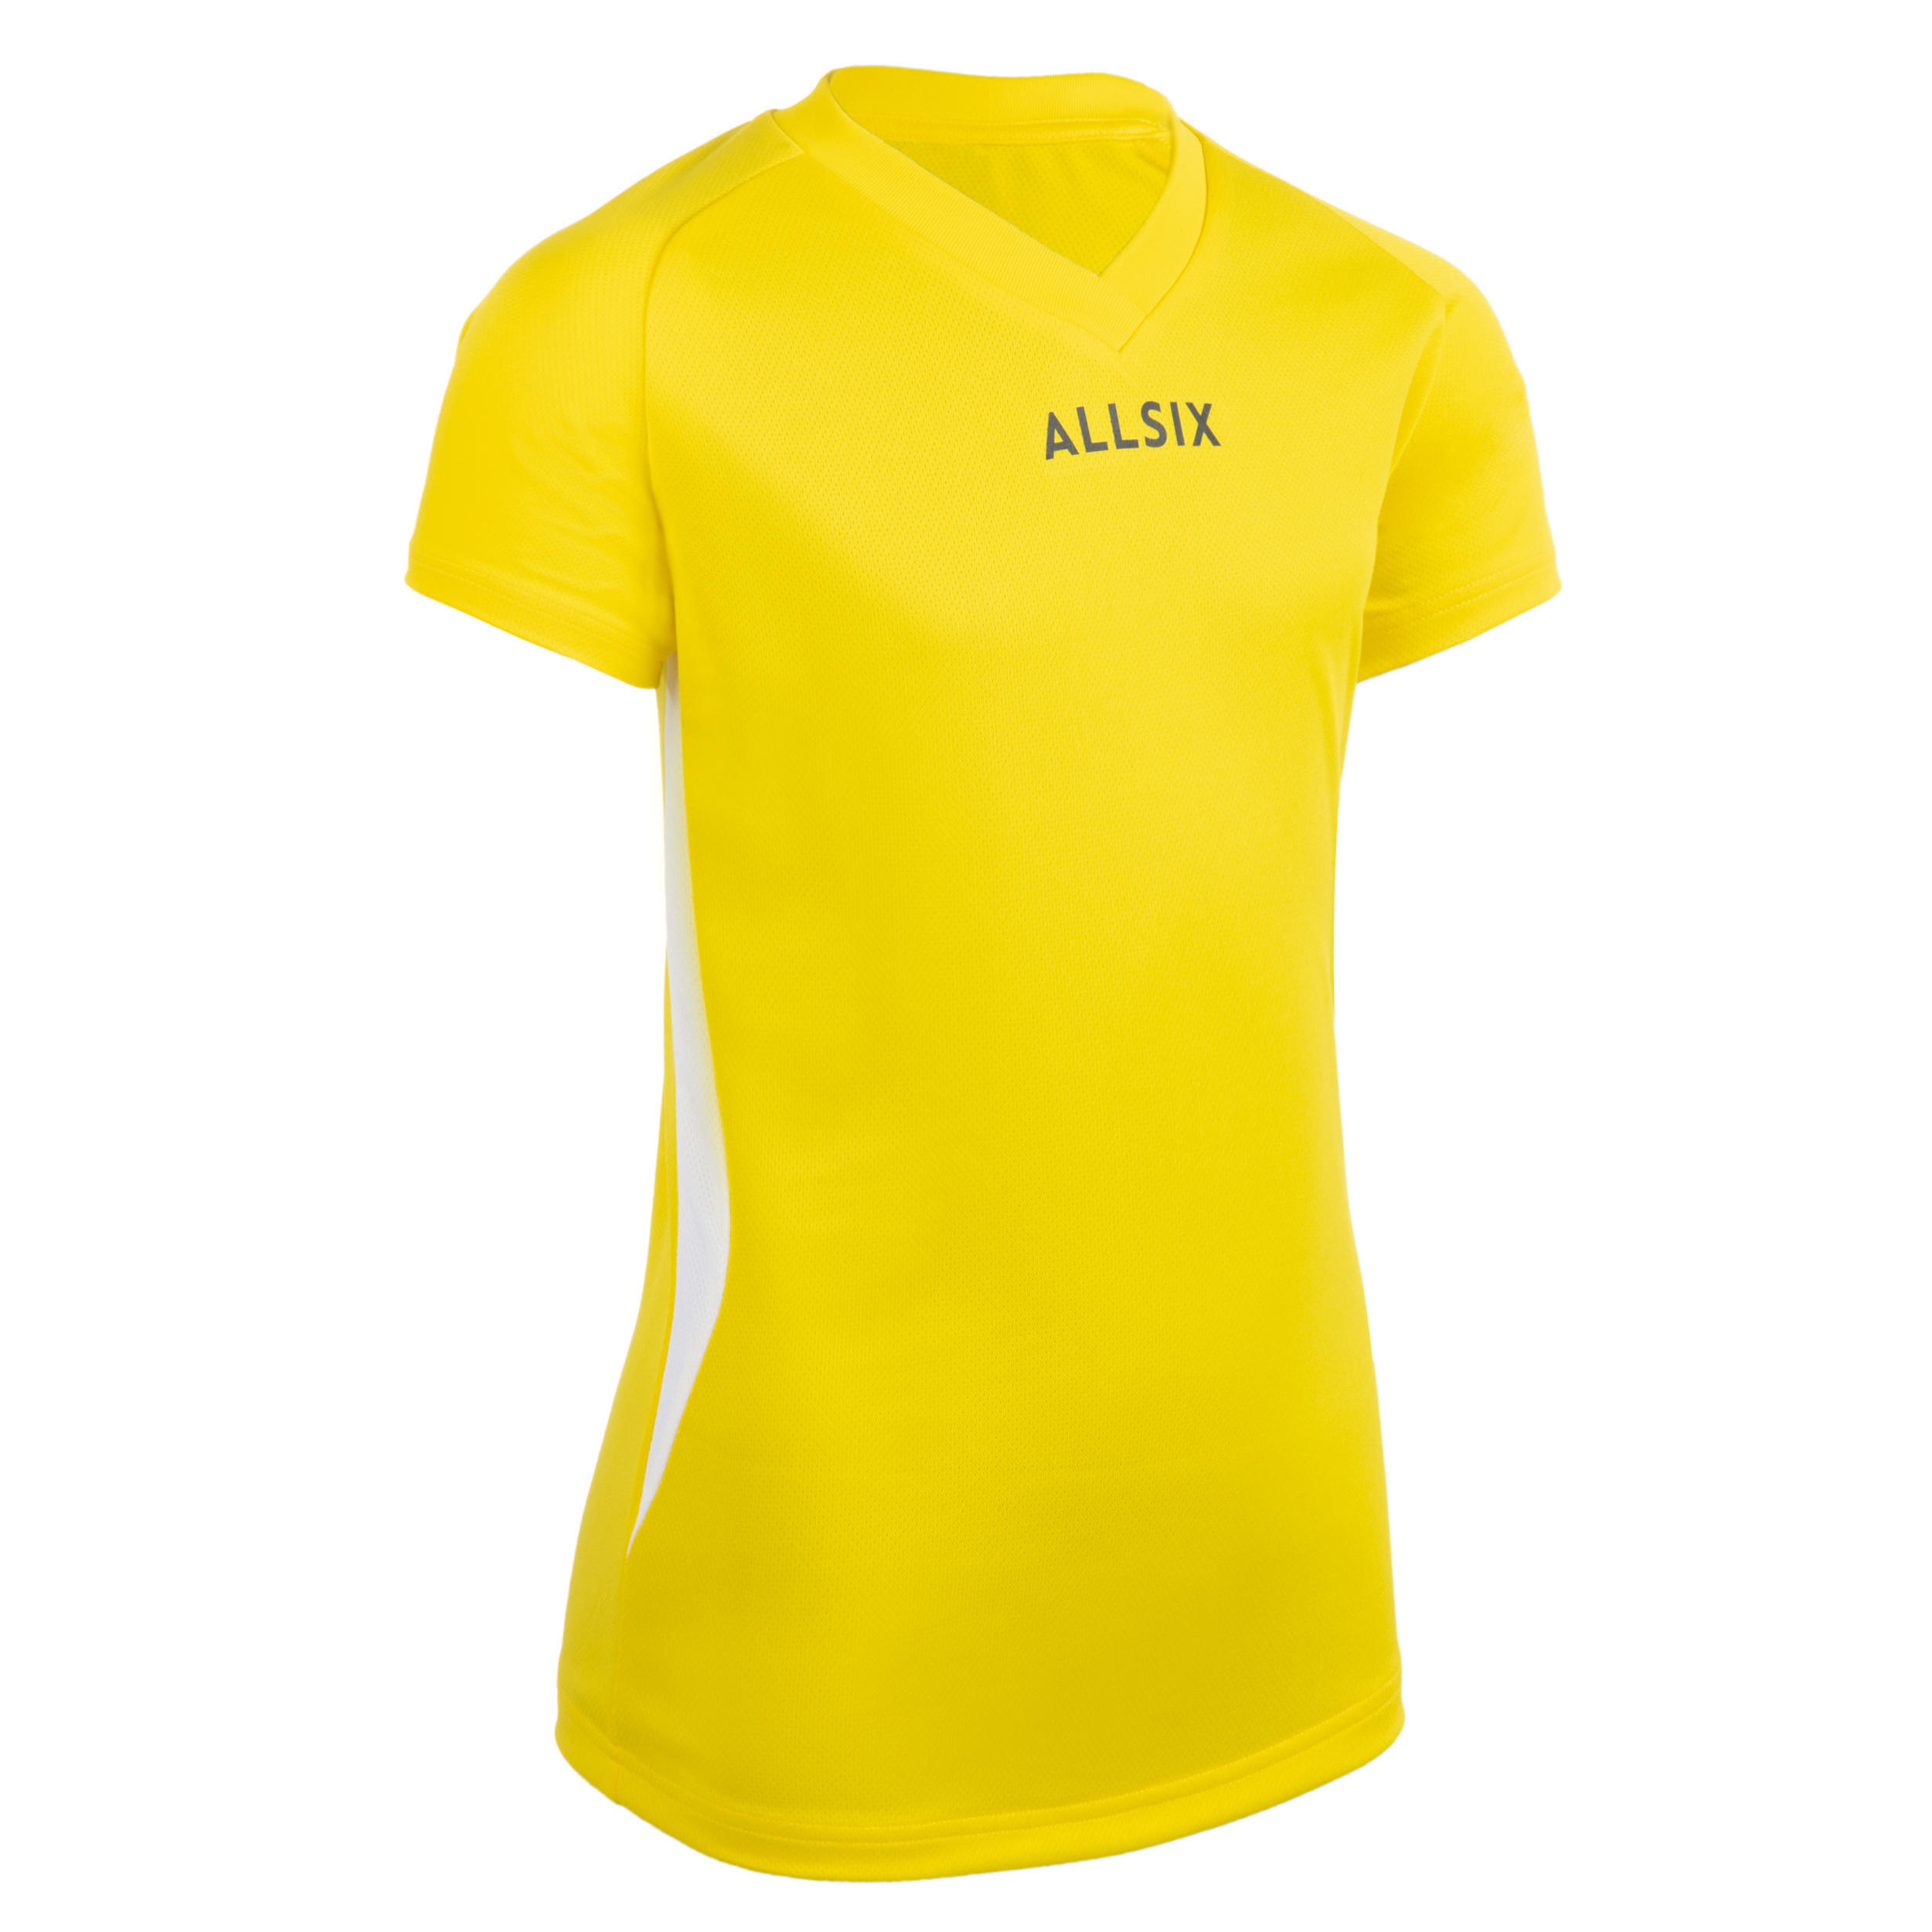 ALLSIX Refurbished V100 Girls Volleyball Jersey - Yellow - A Grade